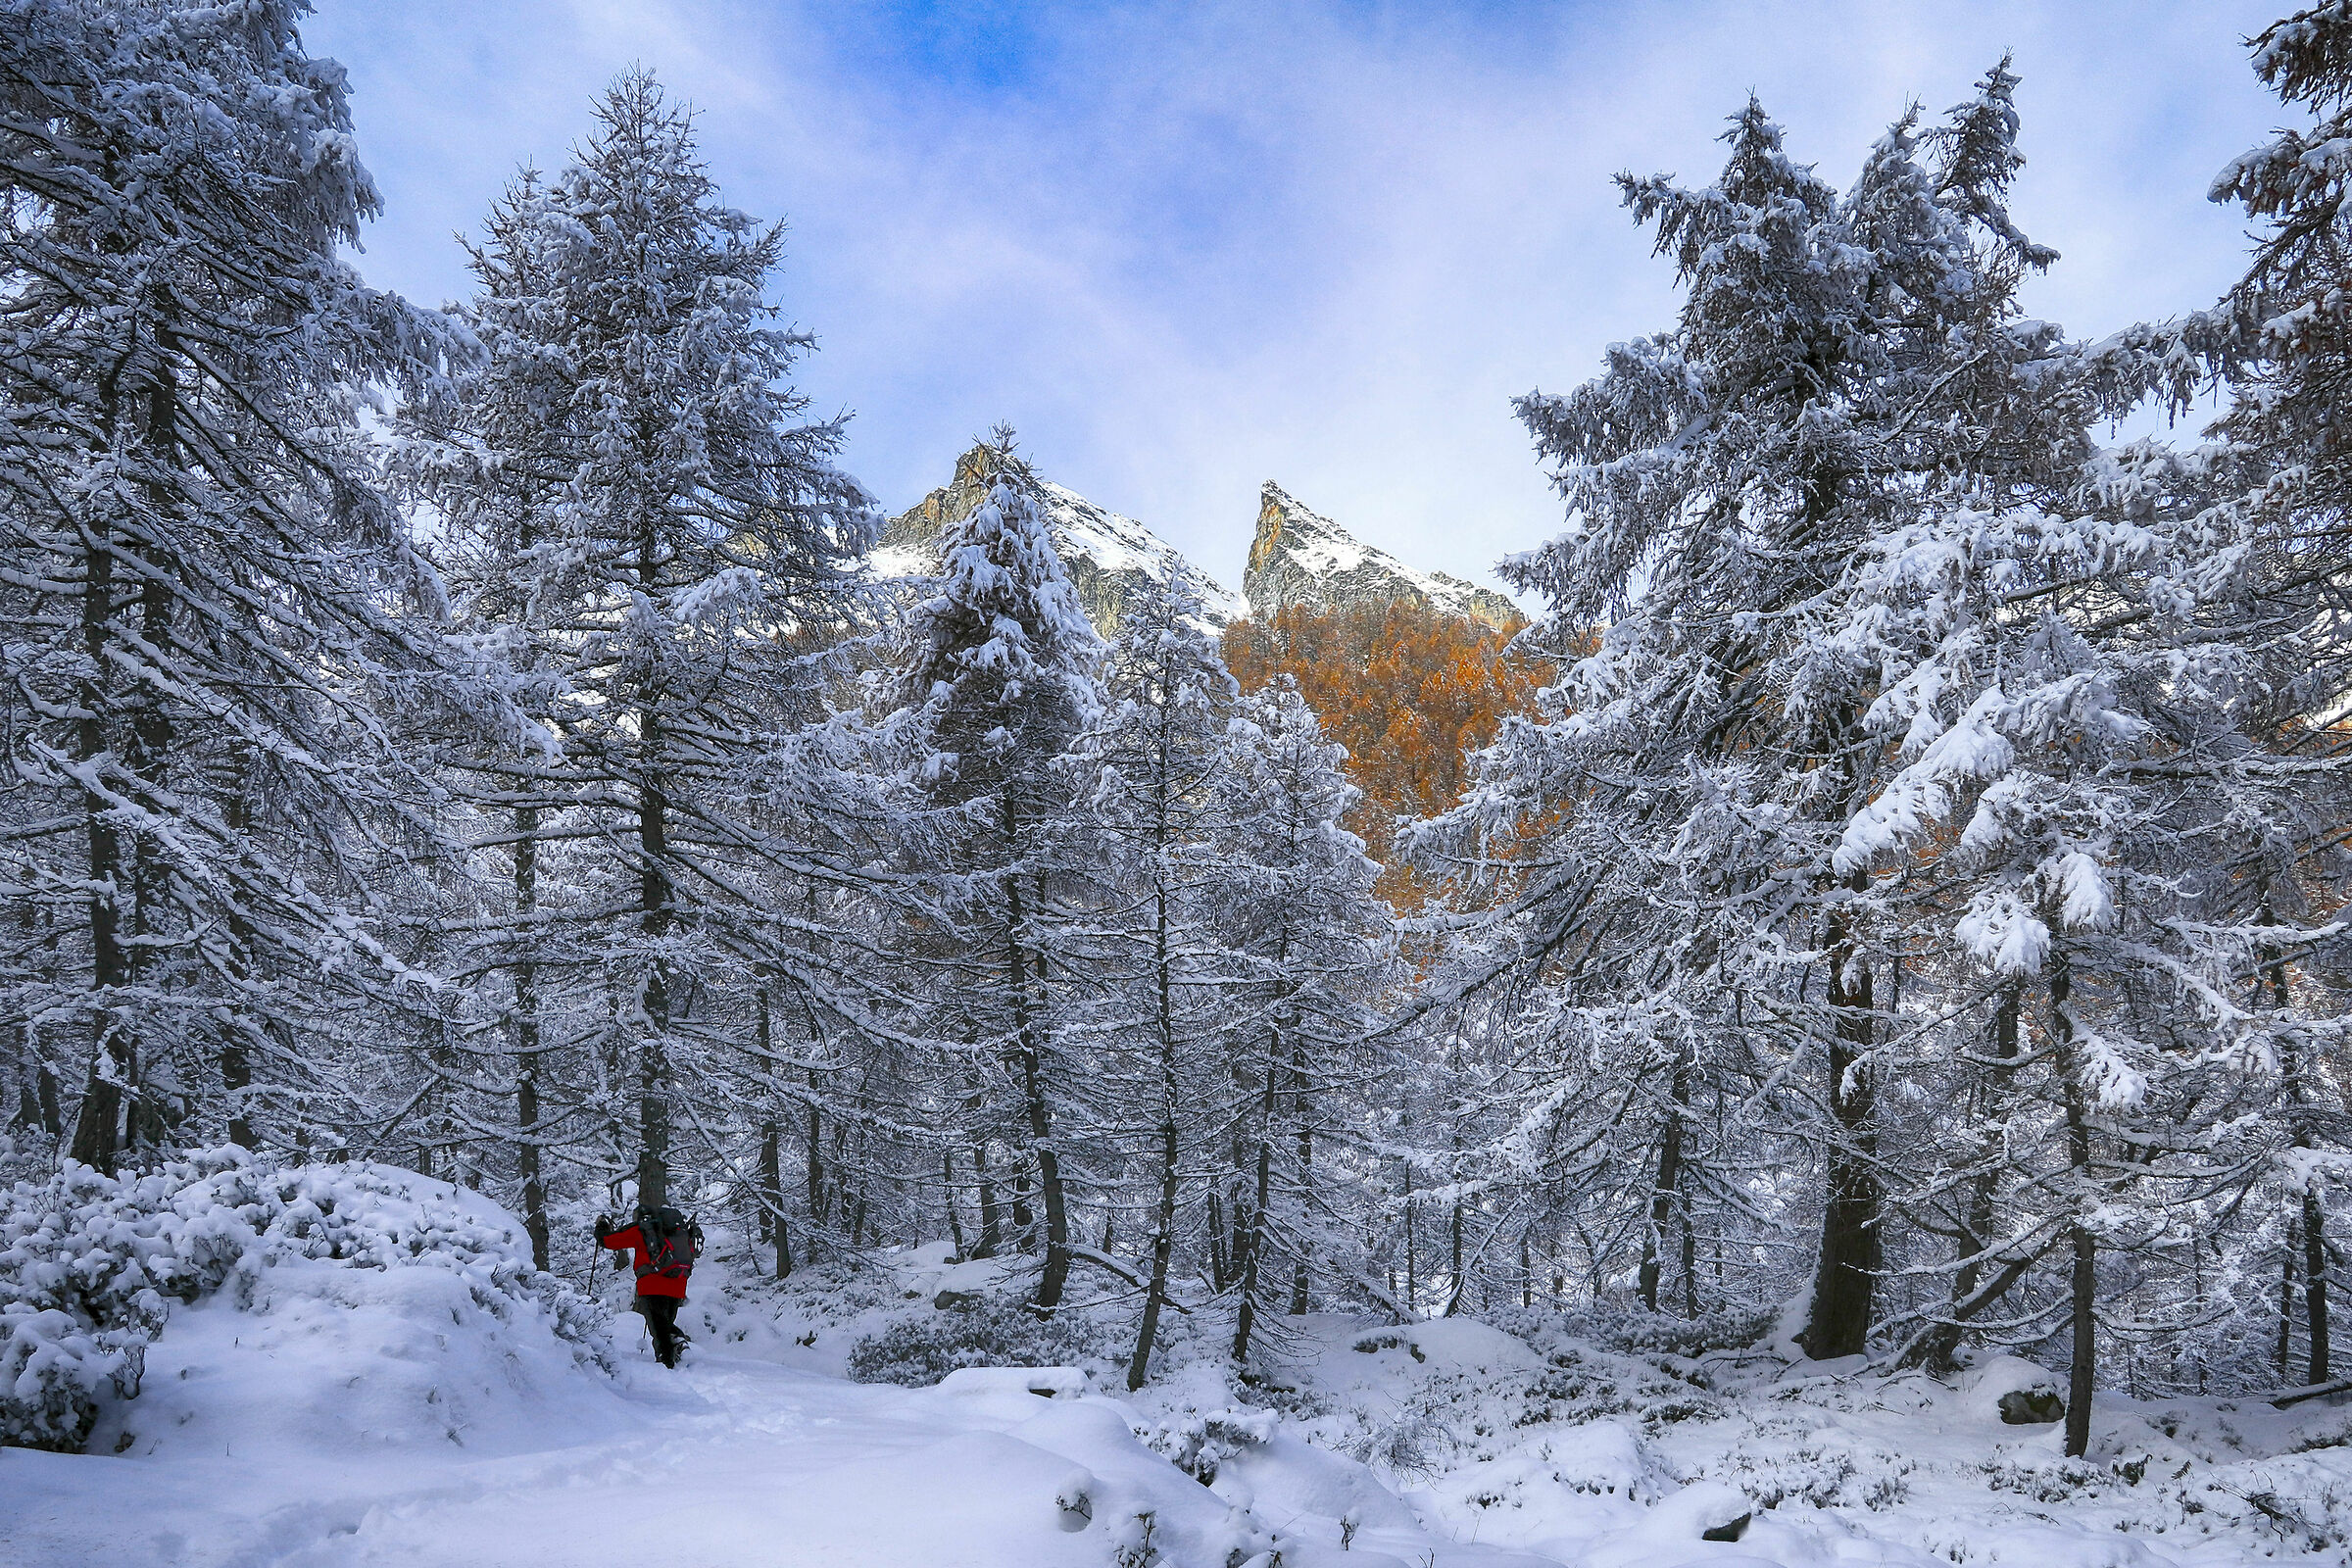 autumn snowfall - Drogo Valley, Lombardy...